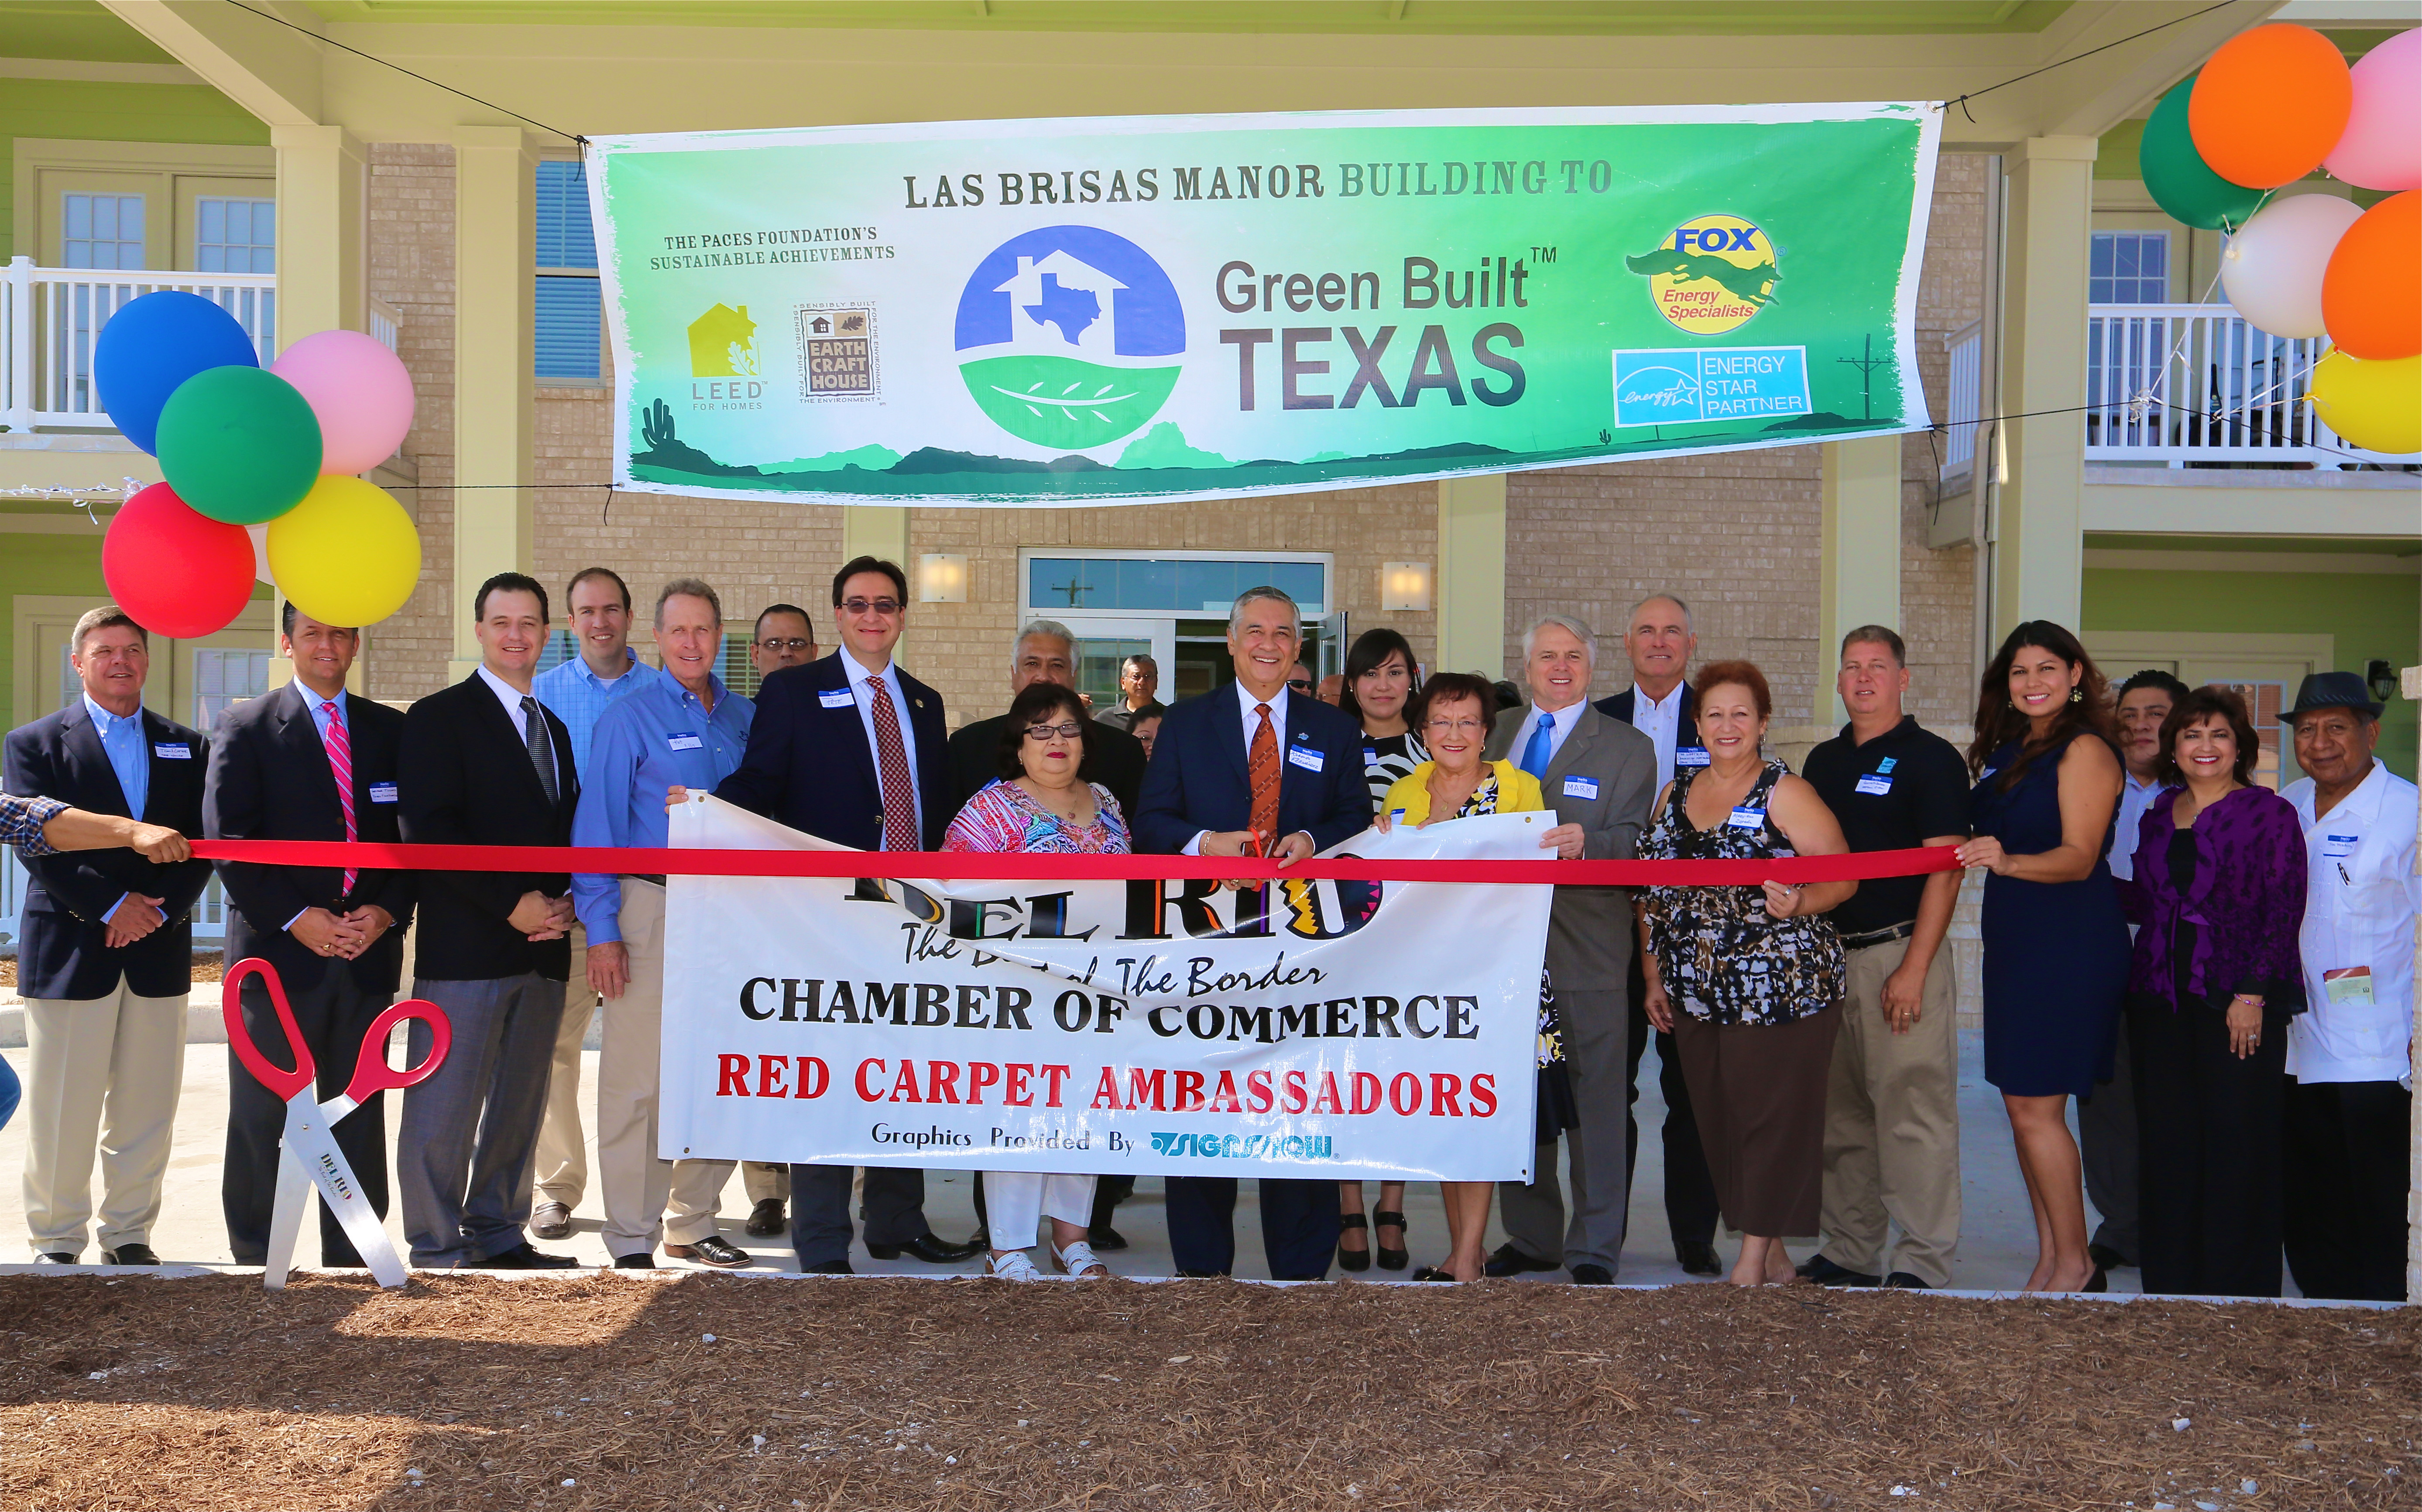 New Affordable Living Development for Seniors opens in Texas